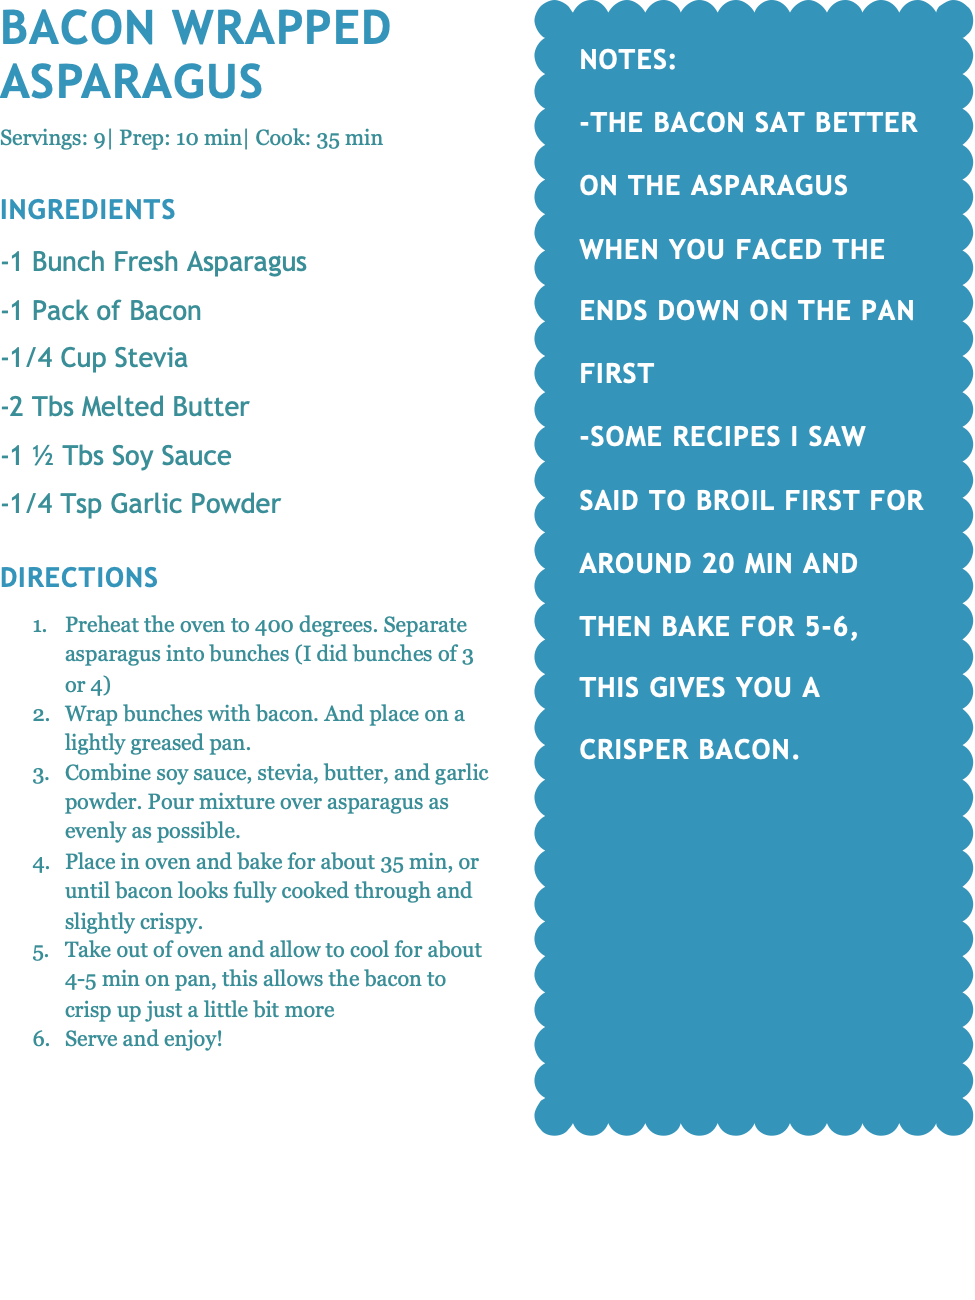 Bacon Wrapped Asparagus Recipe Card